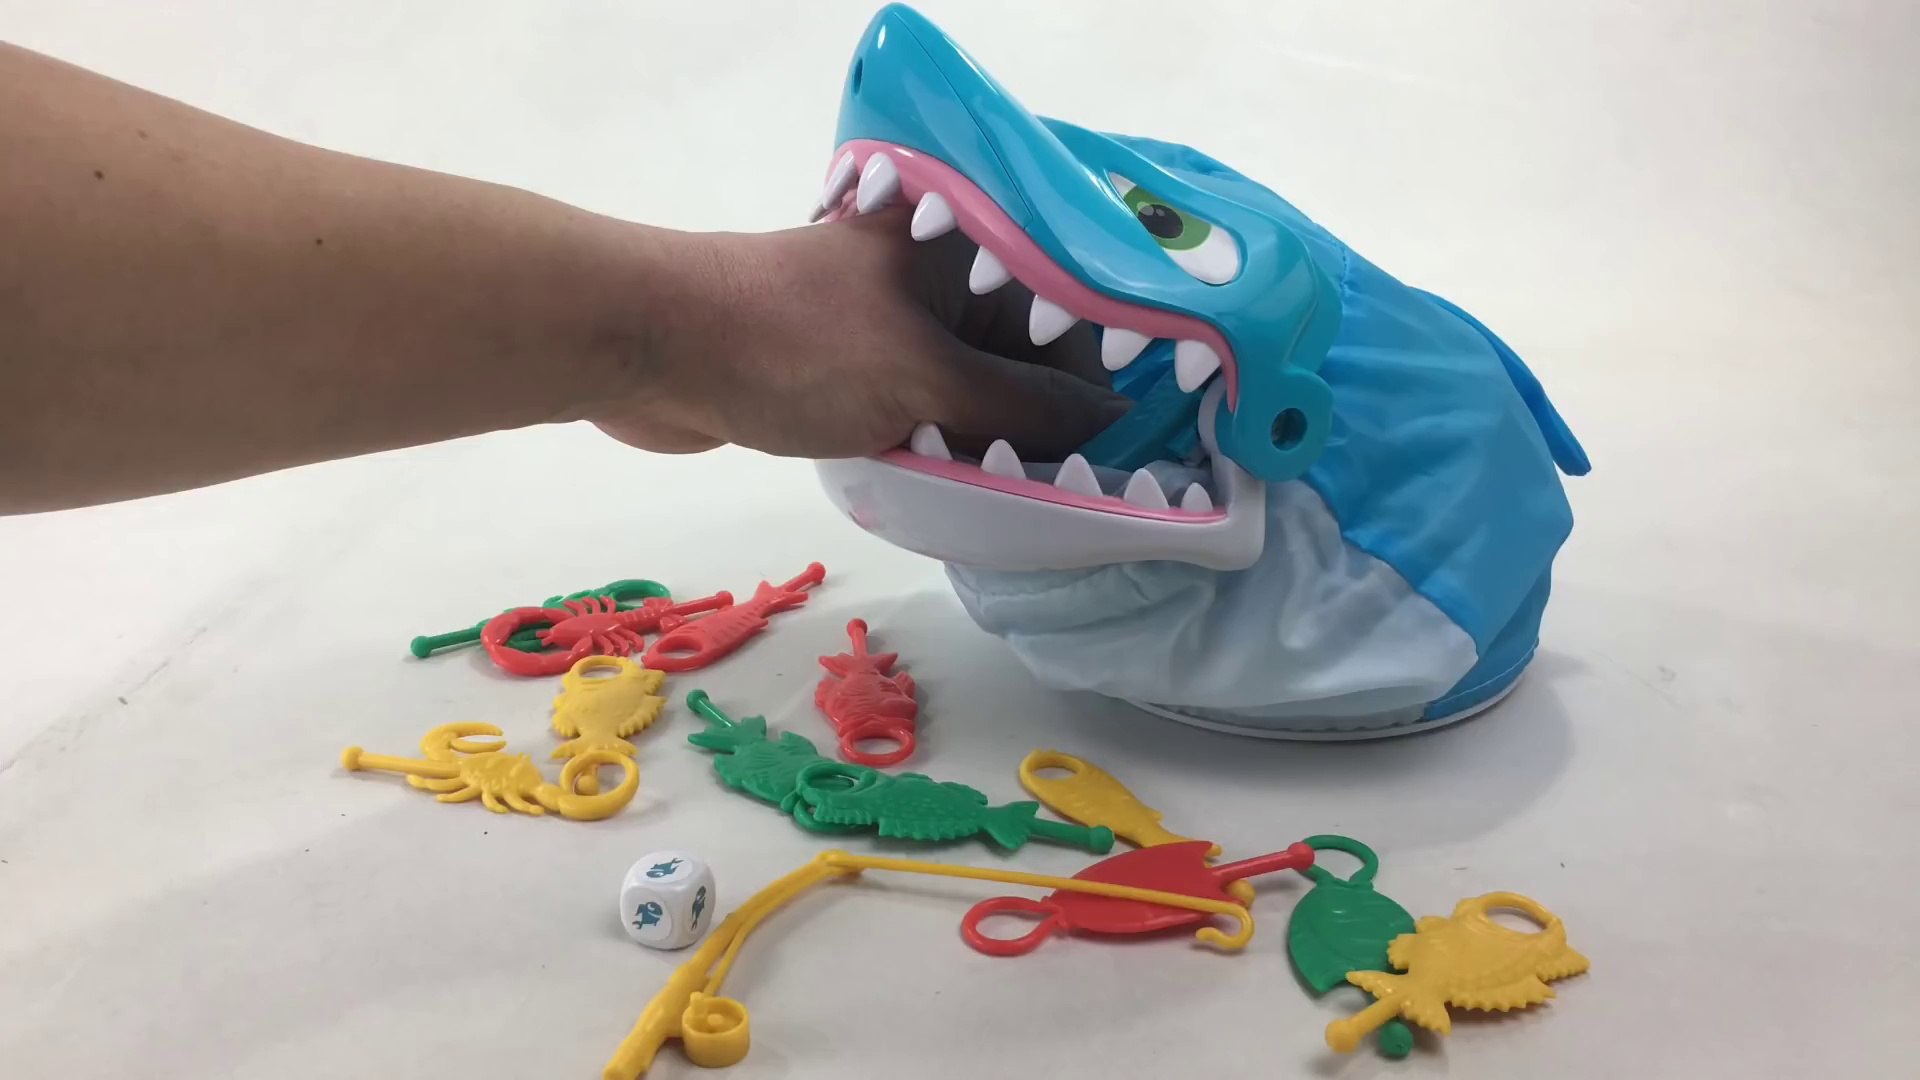 Shark Bite Game at